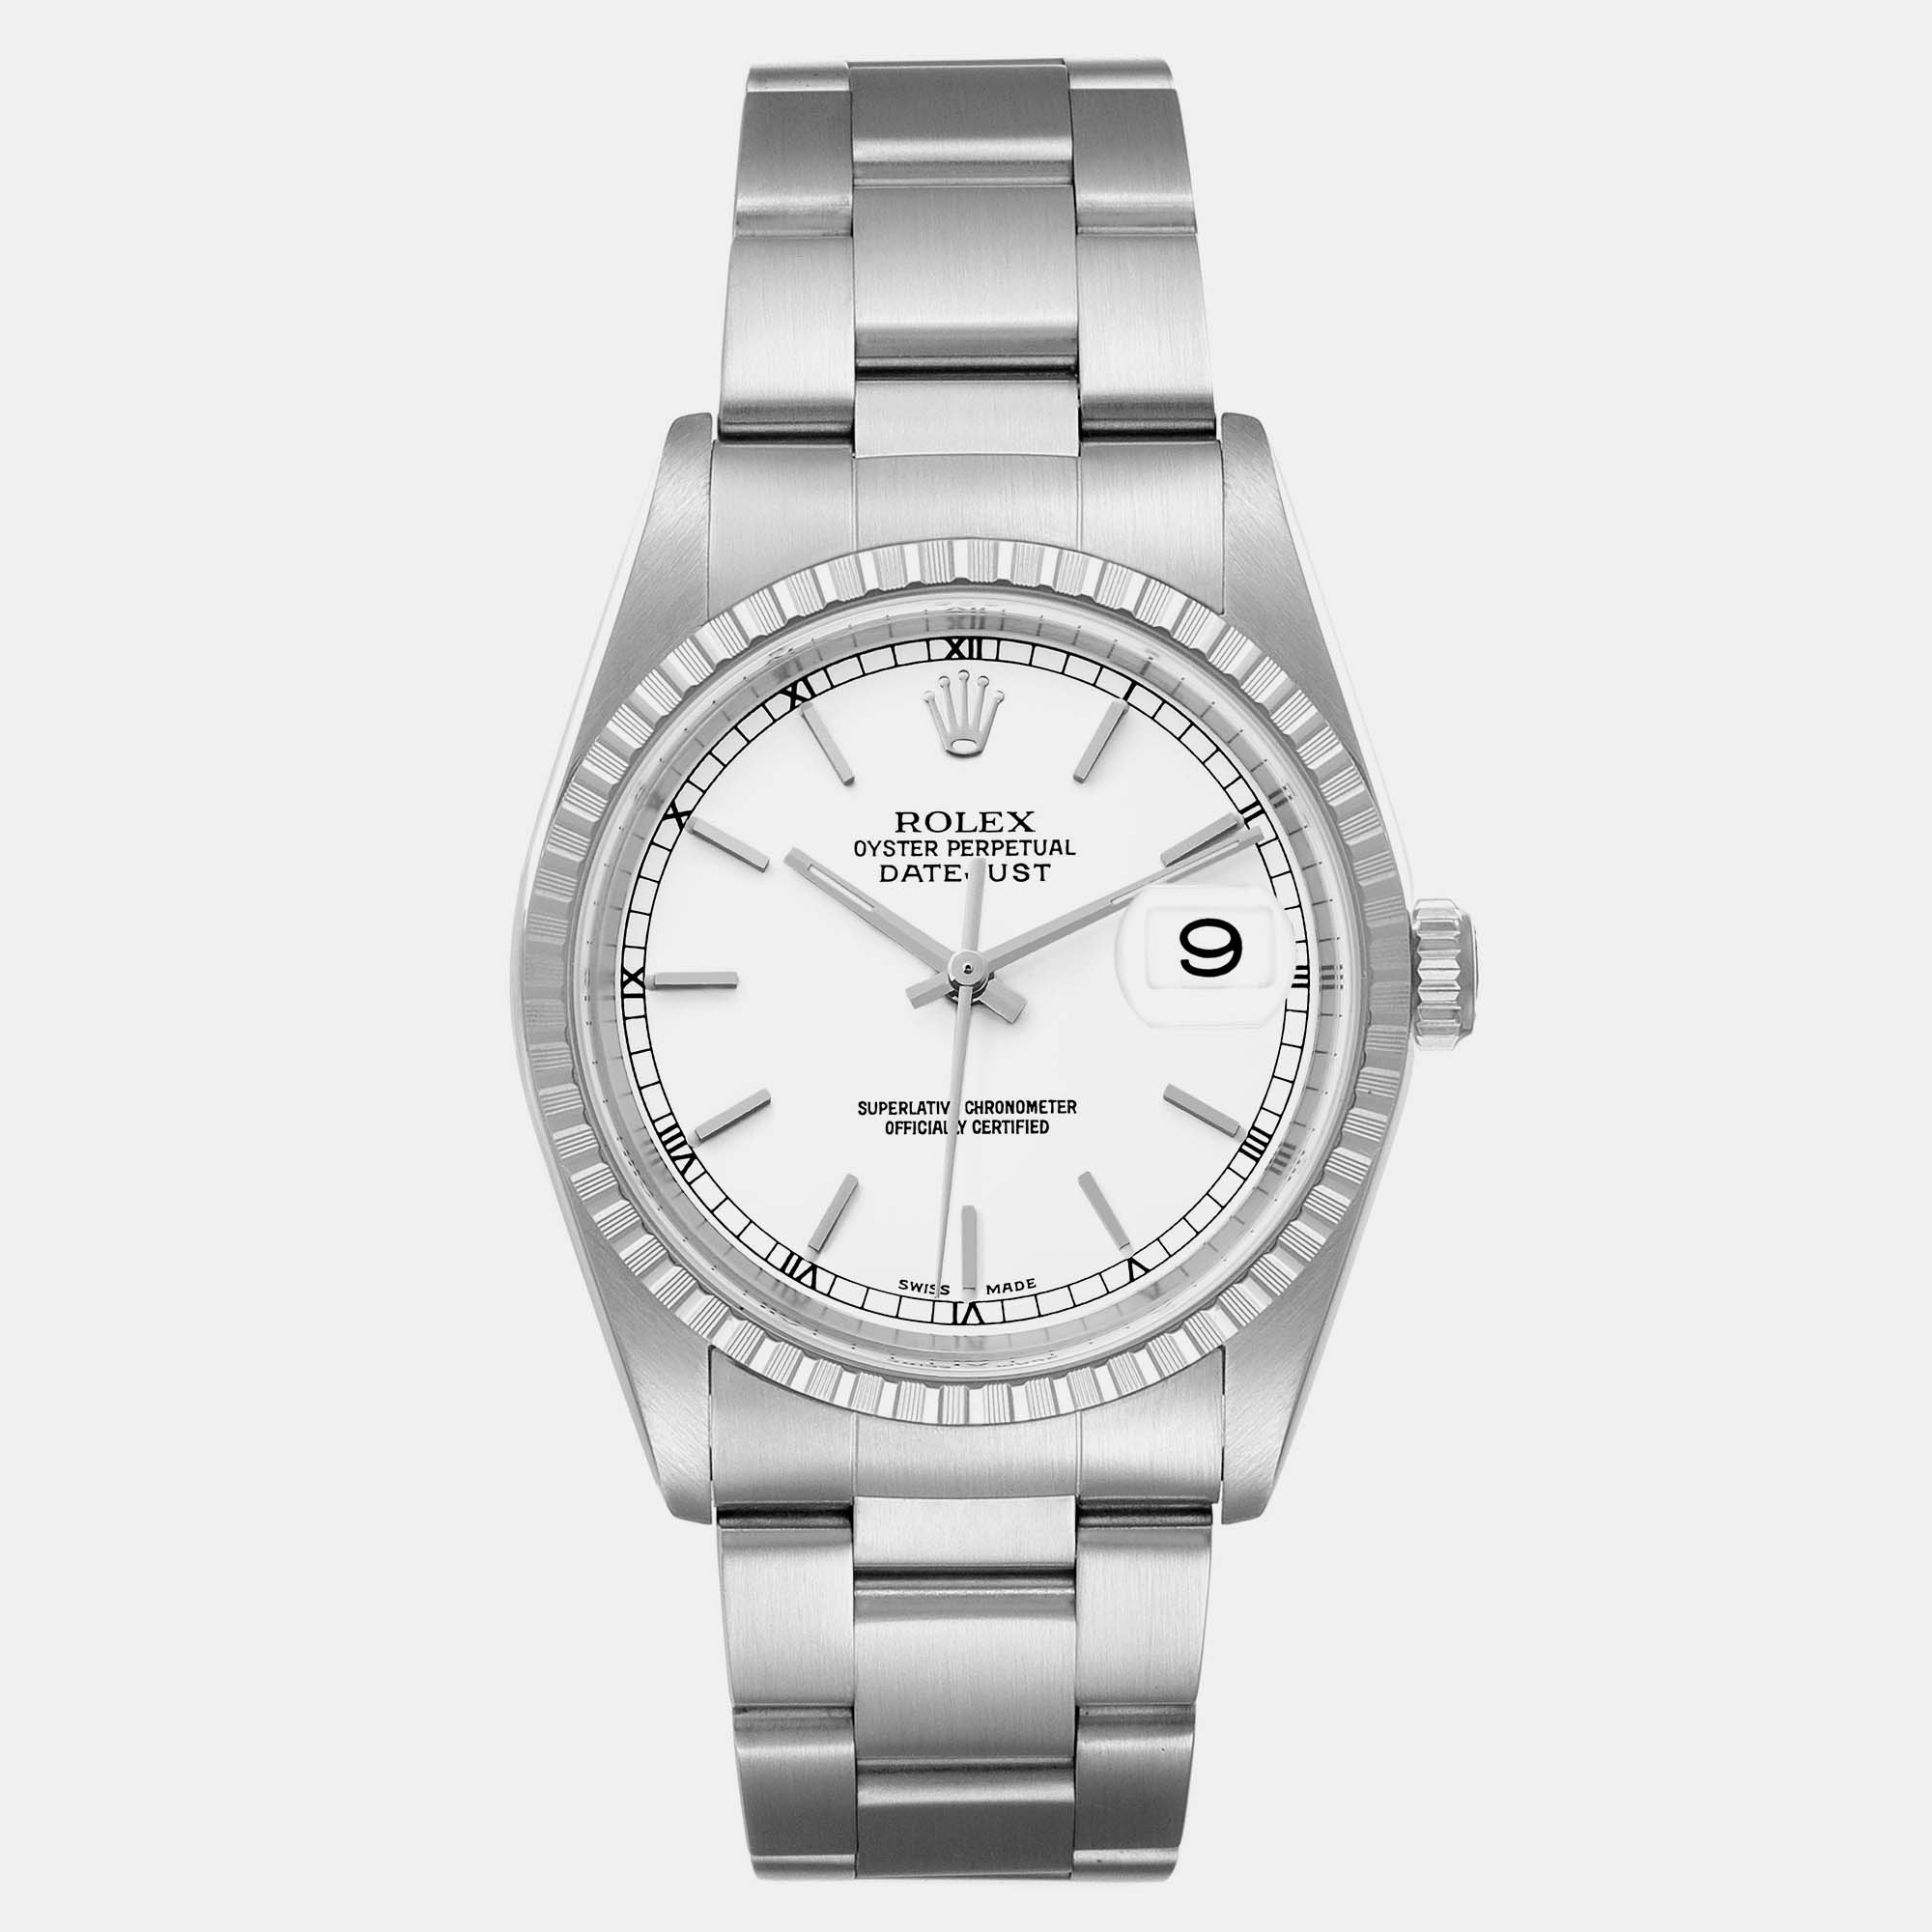 Rolex datejust white dial engine turned bezel steel mens watch 16220 36 mm